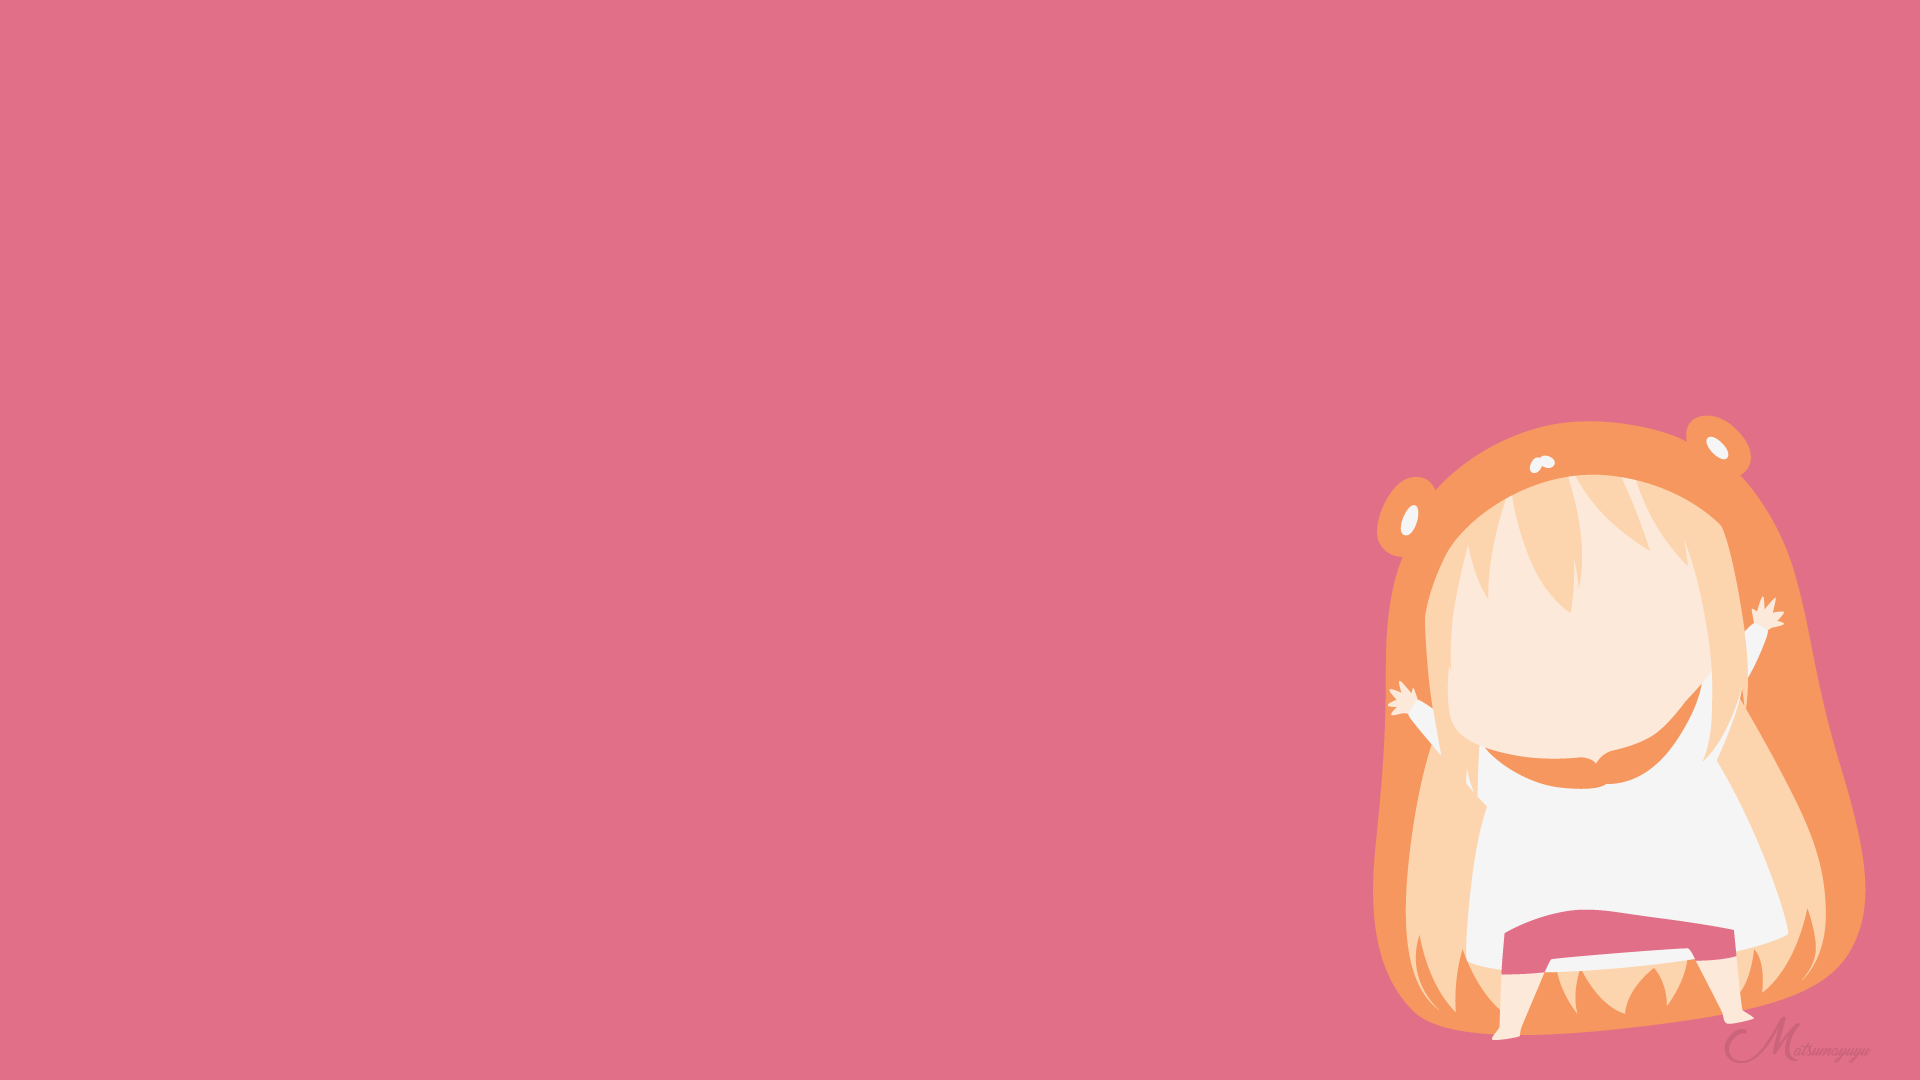 Anime 1920x1080 Himouto! Umaru-chan Doma Umaru anime girls pink background minimalism blonde long hair chibi